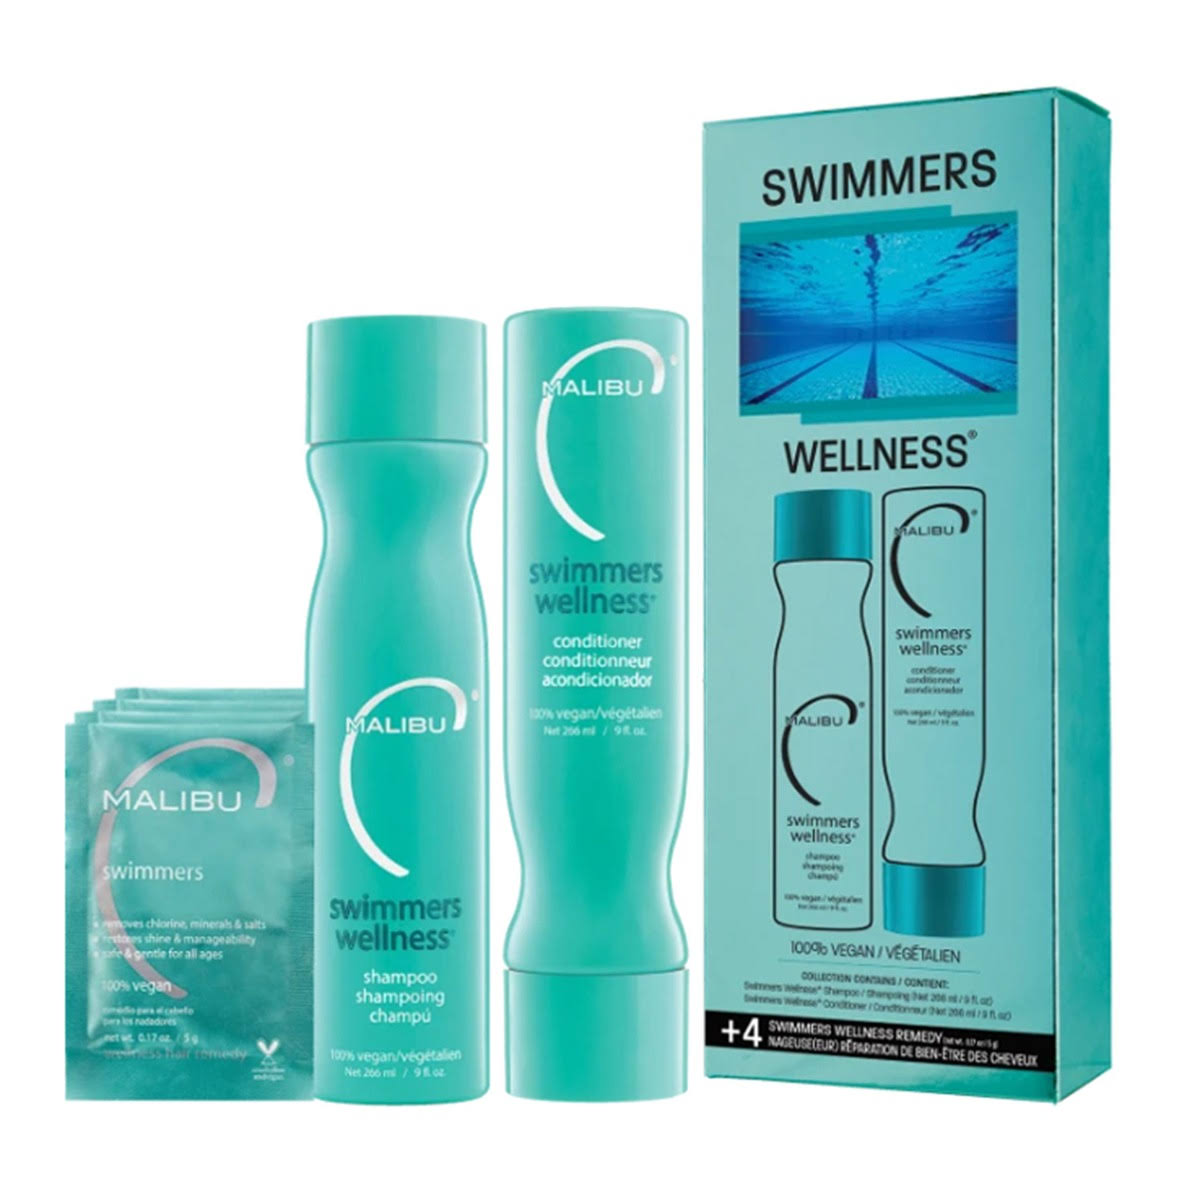 Malibu c swimmers wellness shampoo and conditioner 9 oz each